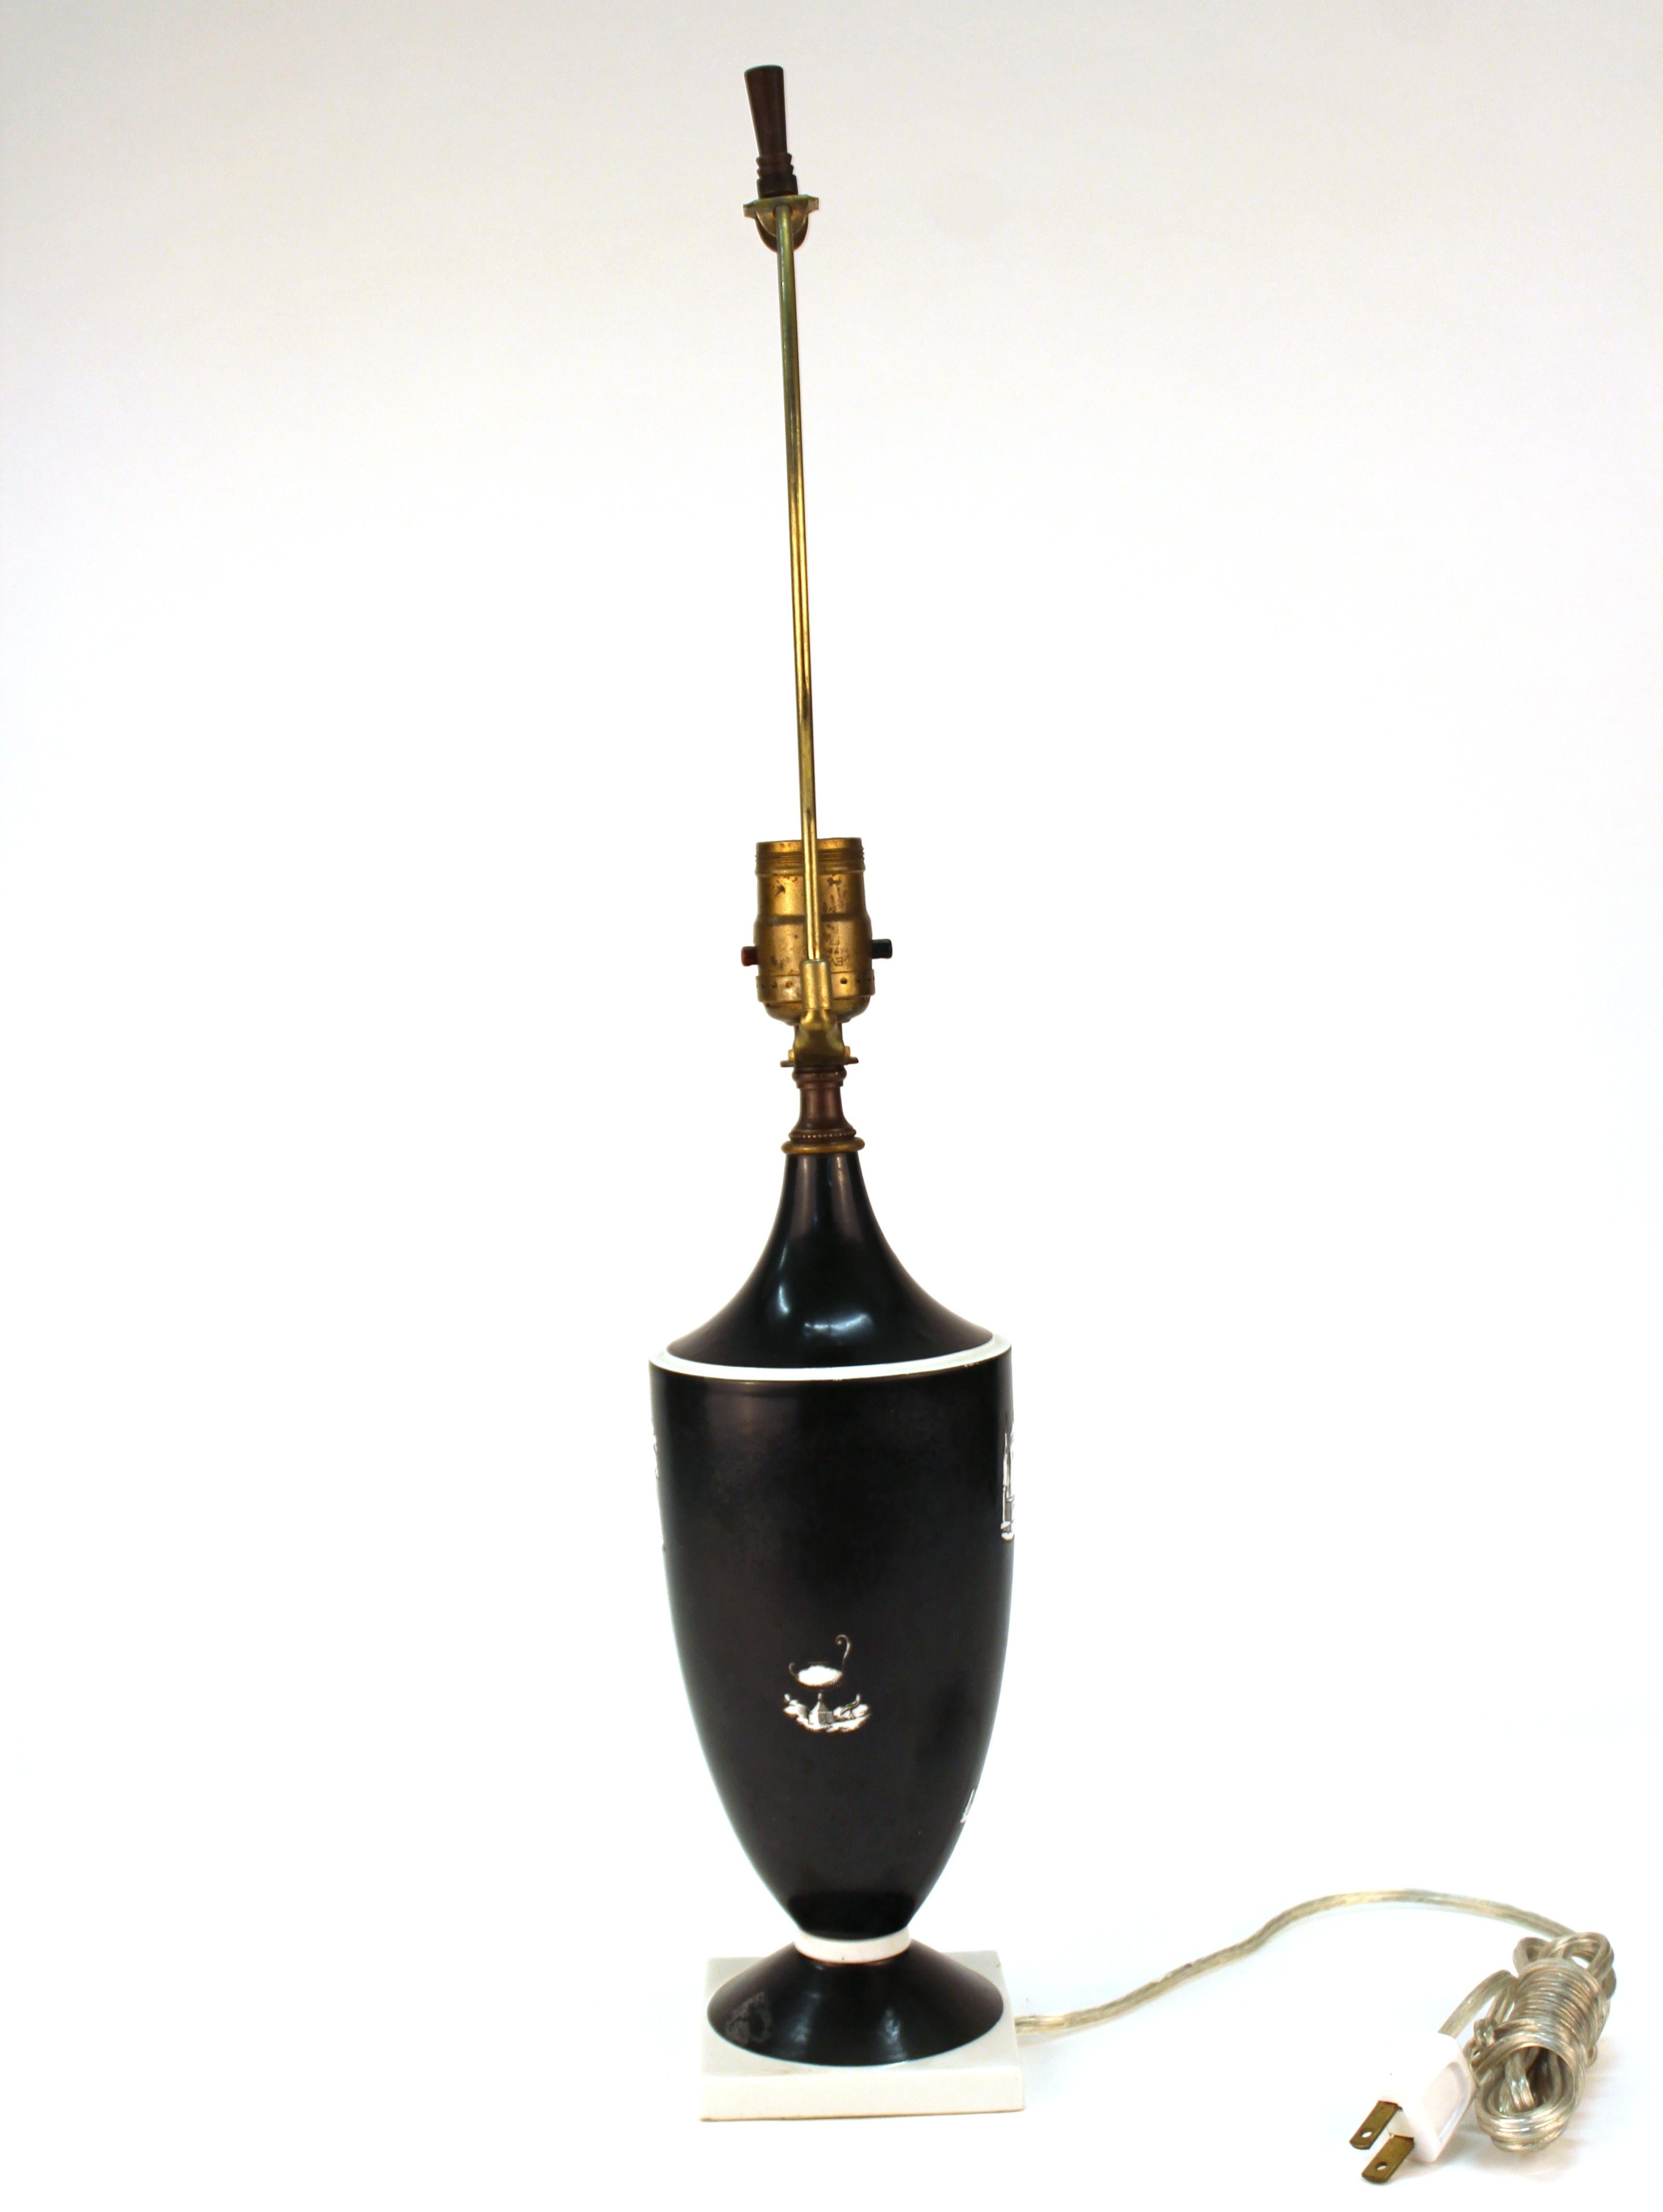 20th Century Gio Ponti for Richard Ginori Midcentury Italian Modern Table Lamp